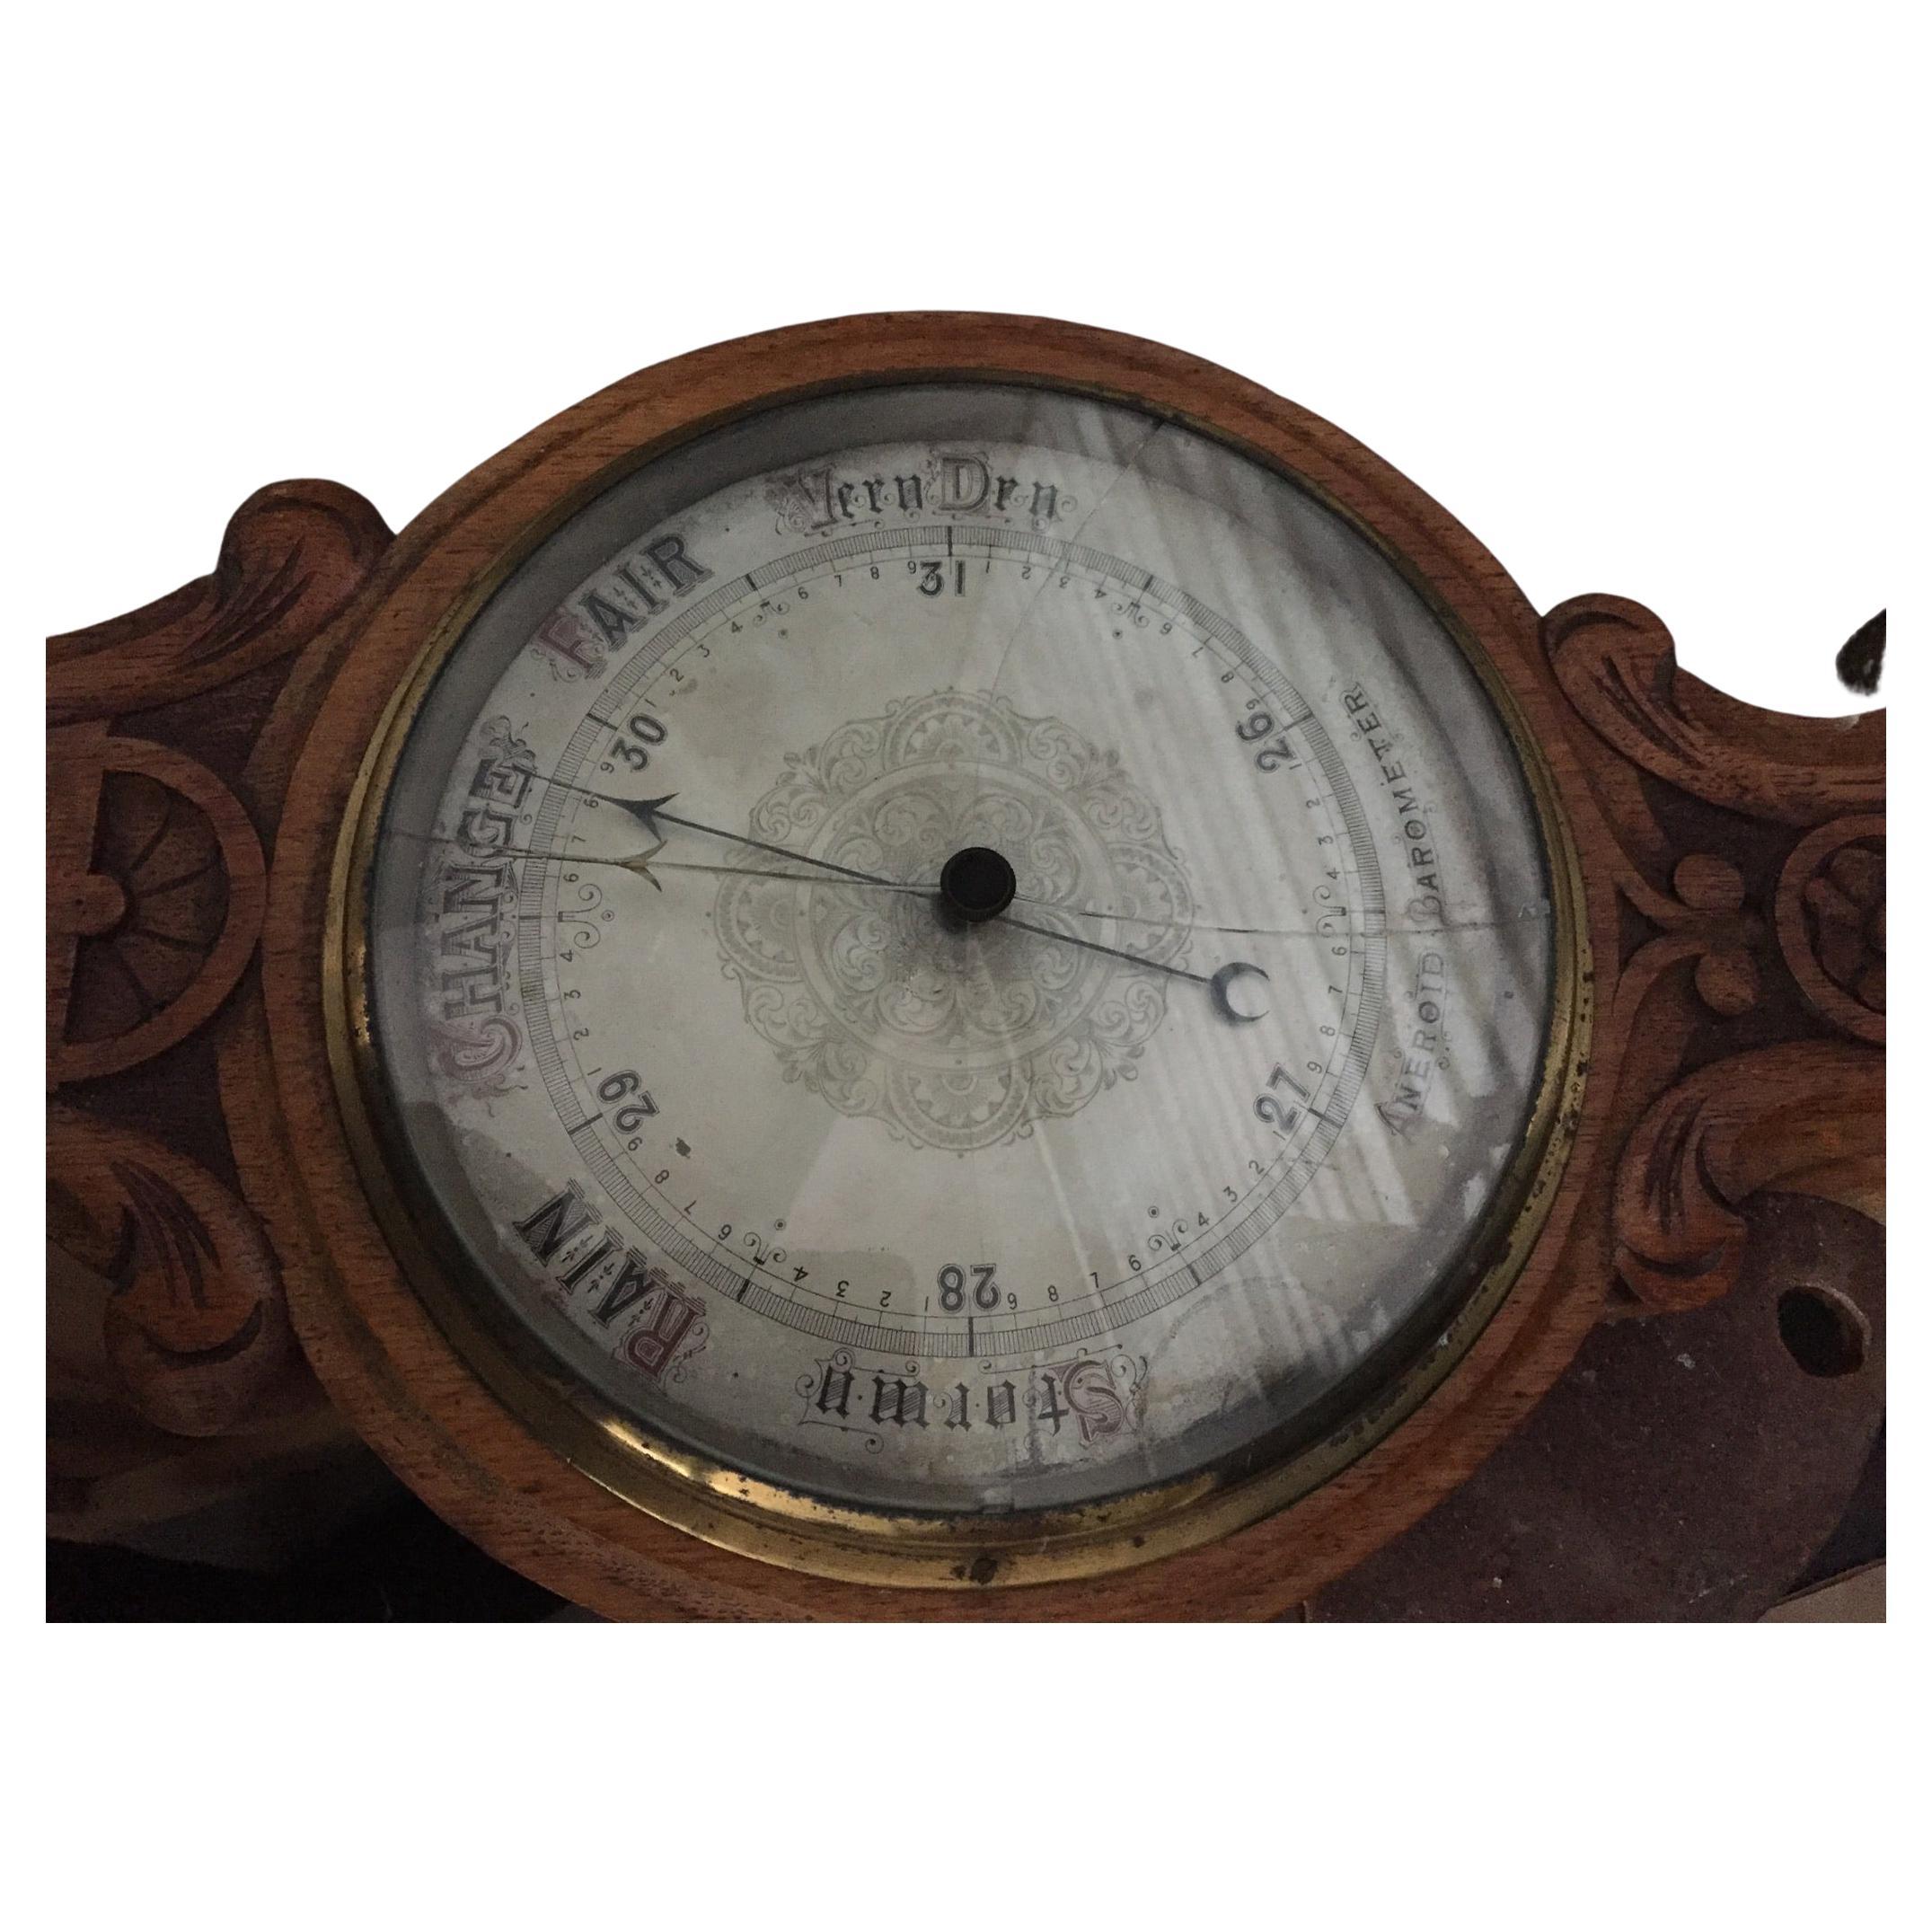 Vintage Aneroid barometer.